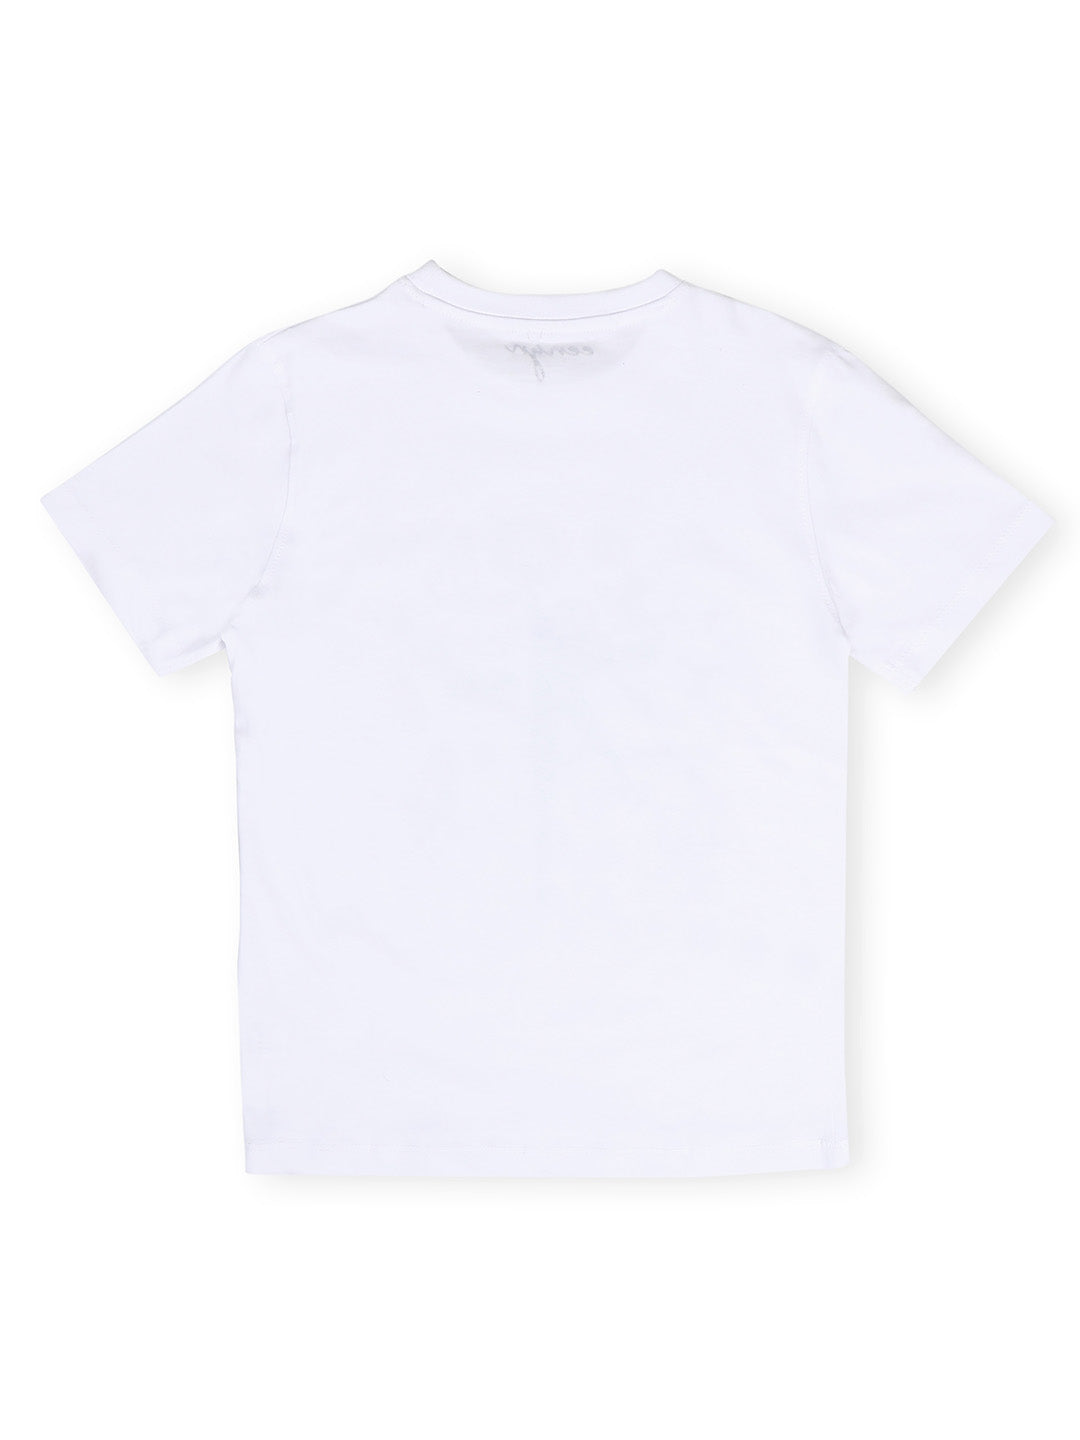 TWGE - Kids Tshirt for Boys - ISRO Space Theme - Printed Cotton Tees - Color Off White